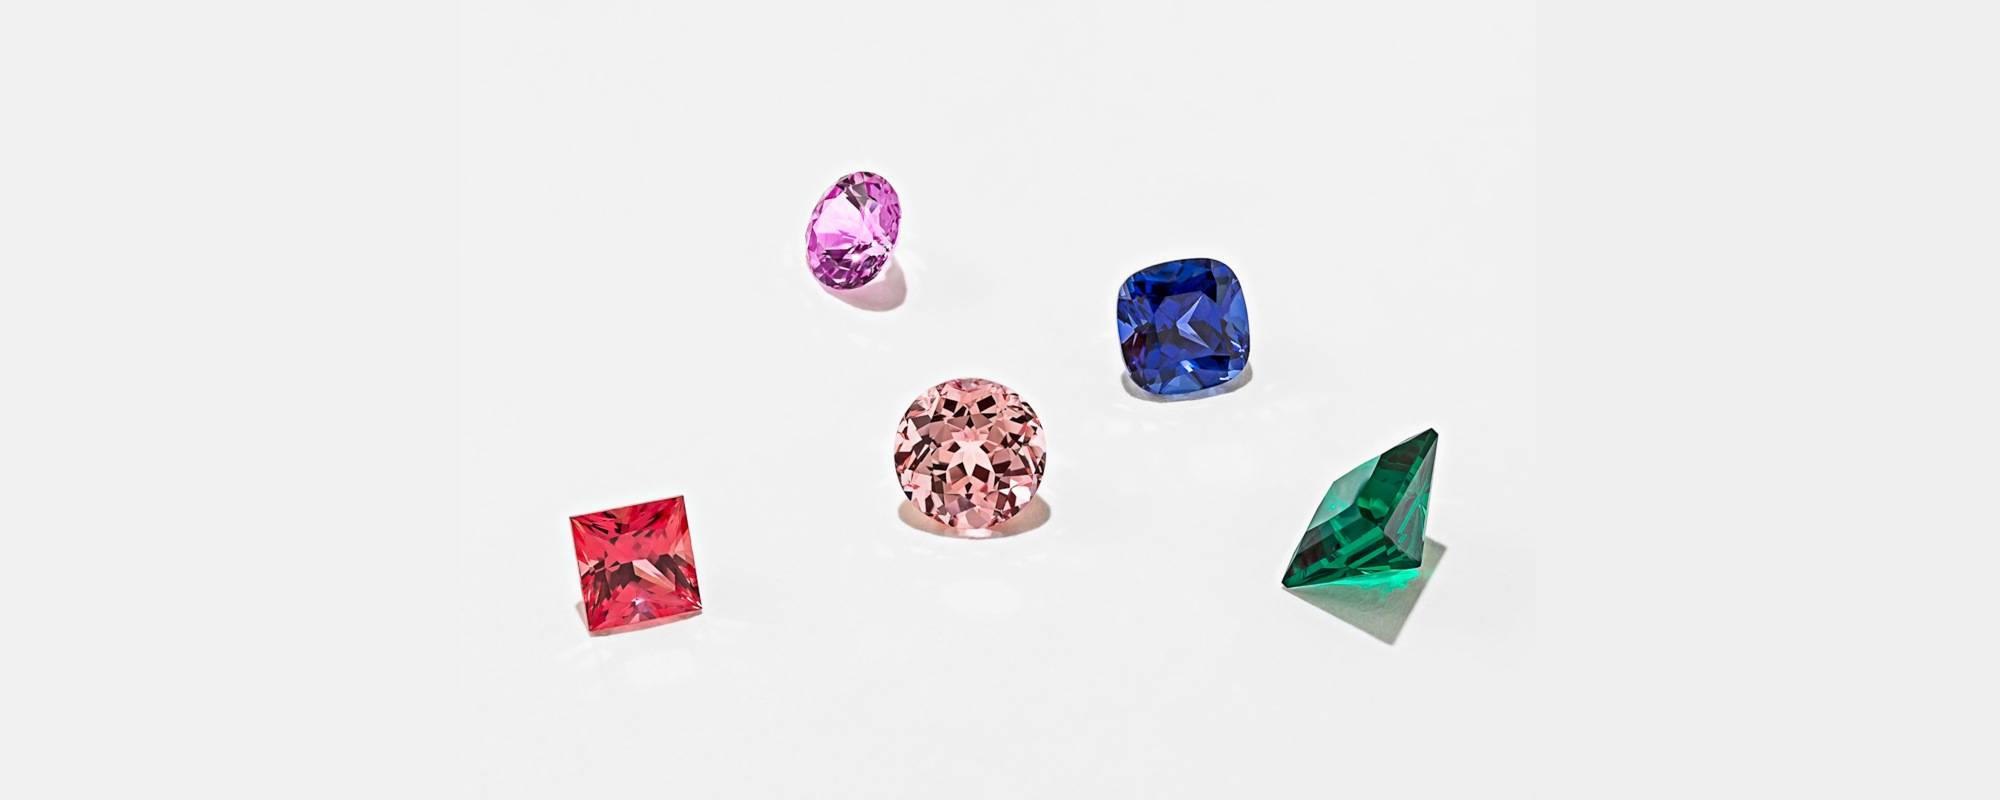 Gemstones 